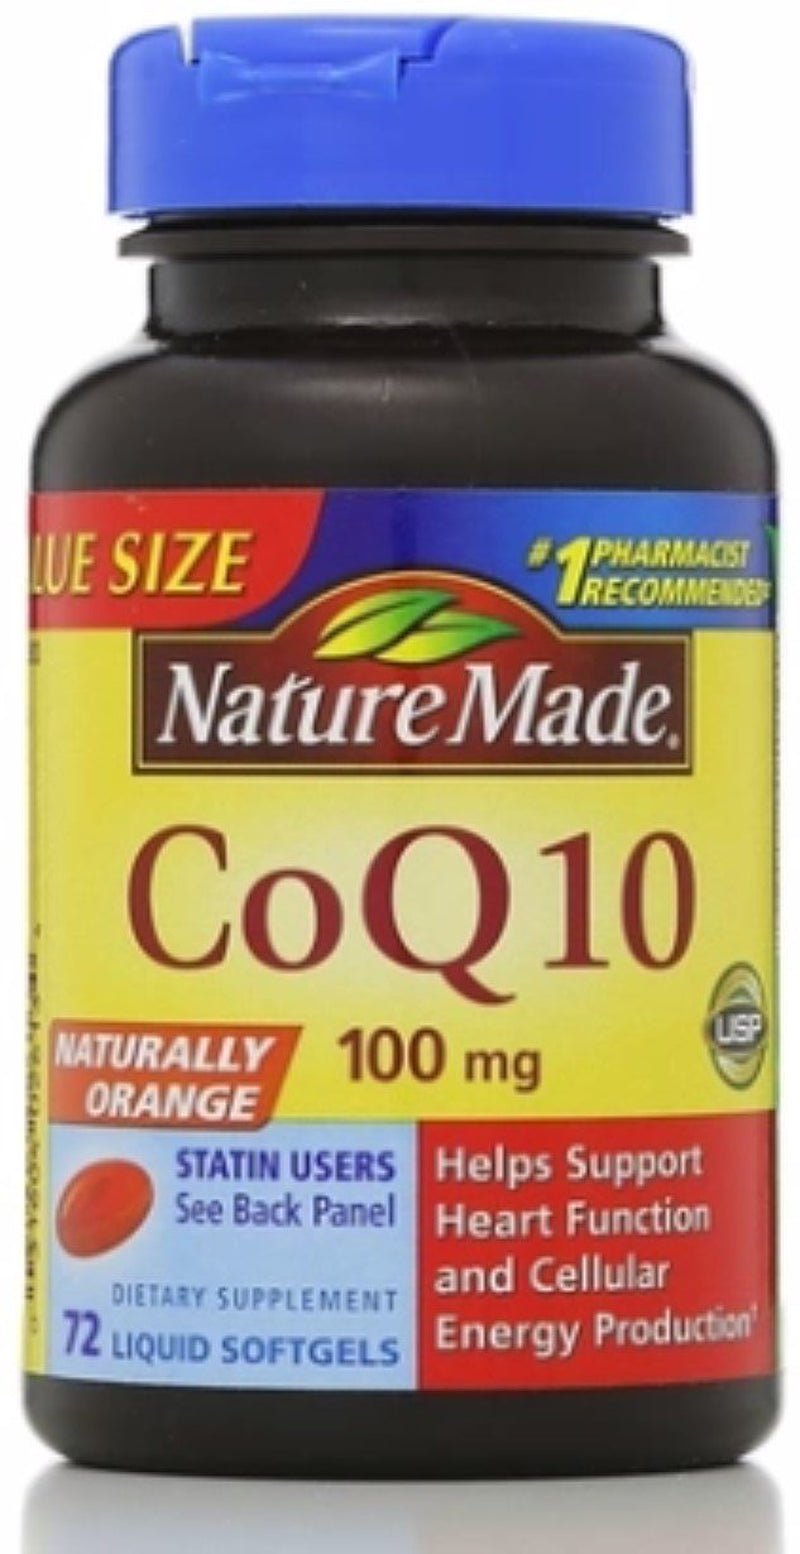 Nature Made Coq10 100 Mg Softgels, 72 Ea (Pack of 2)